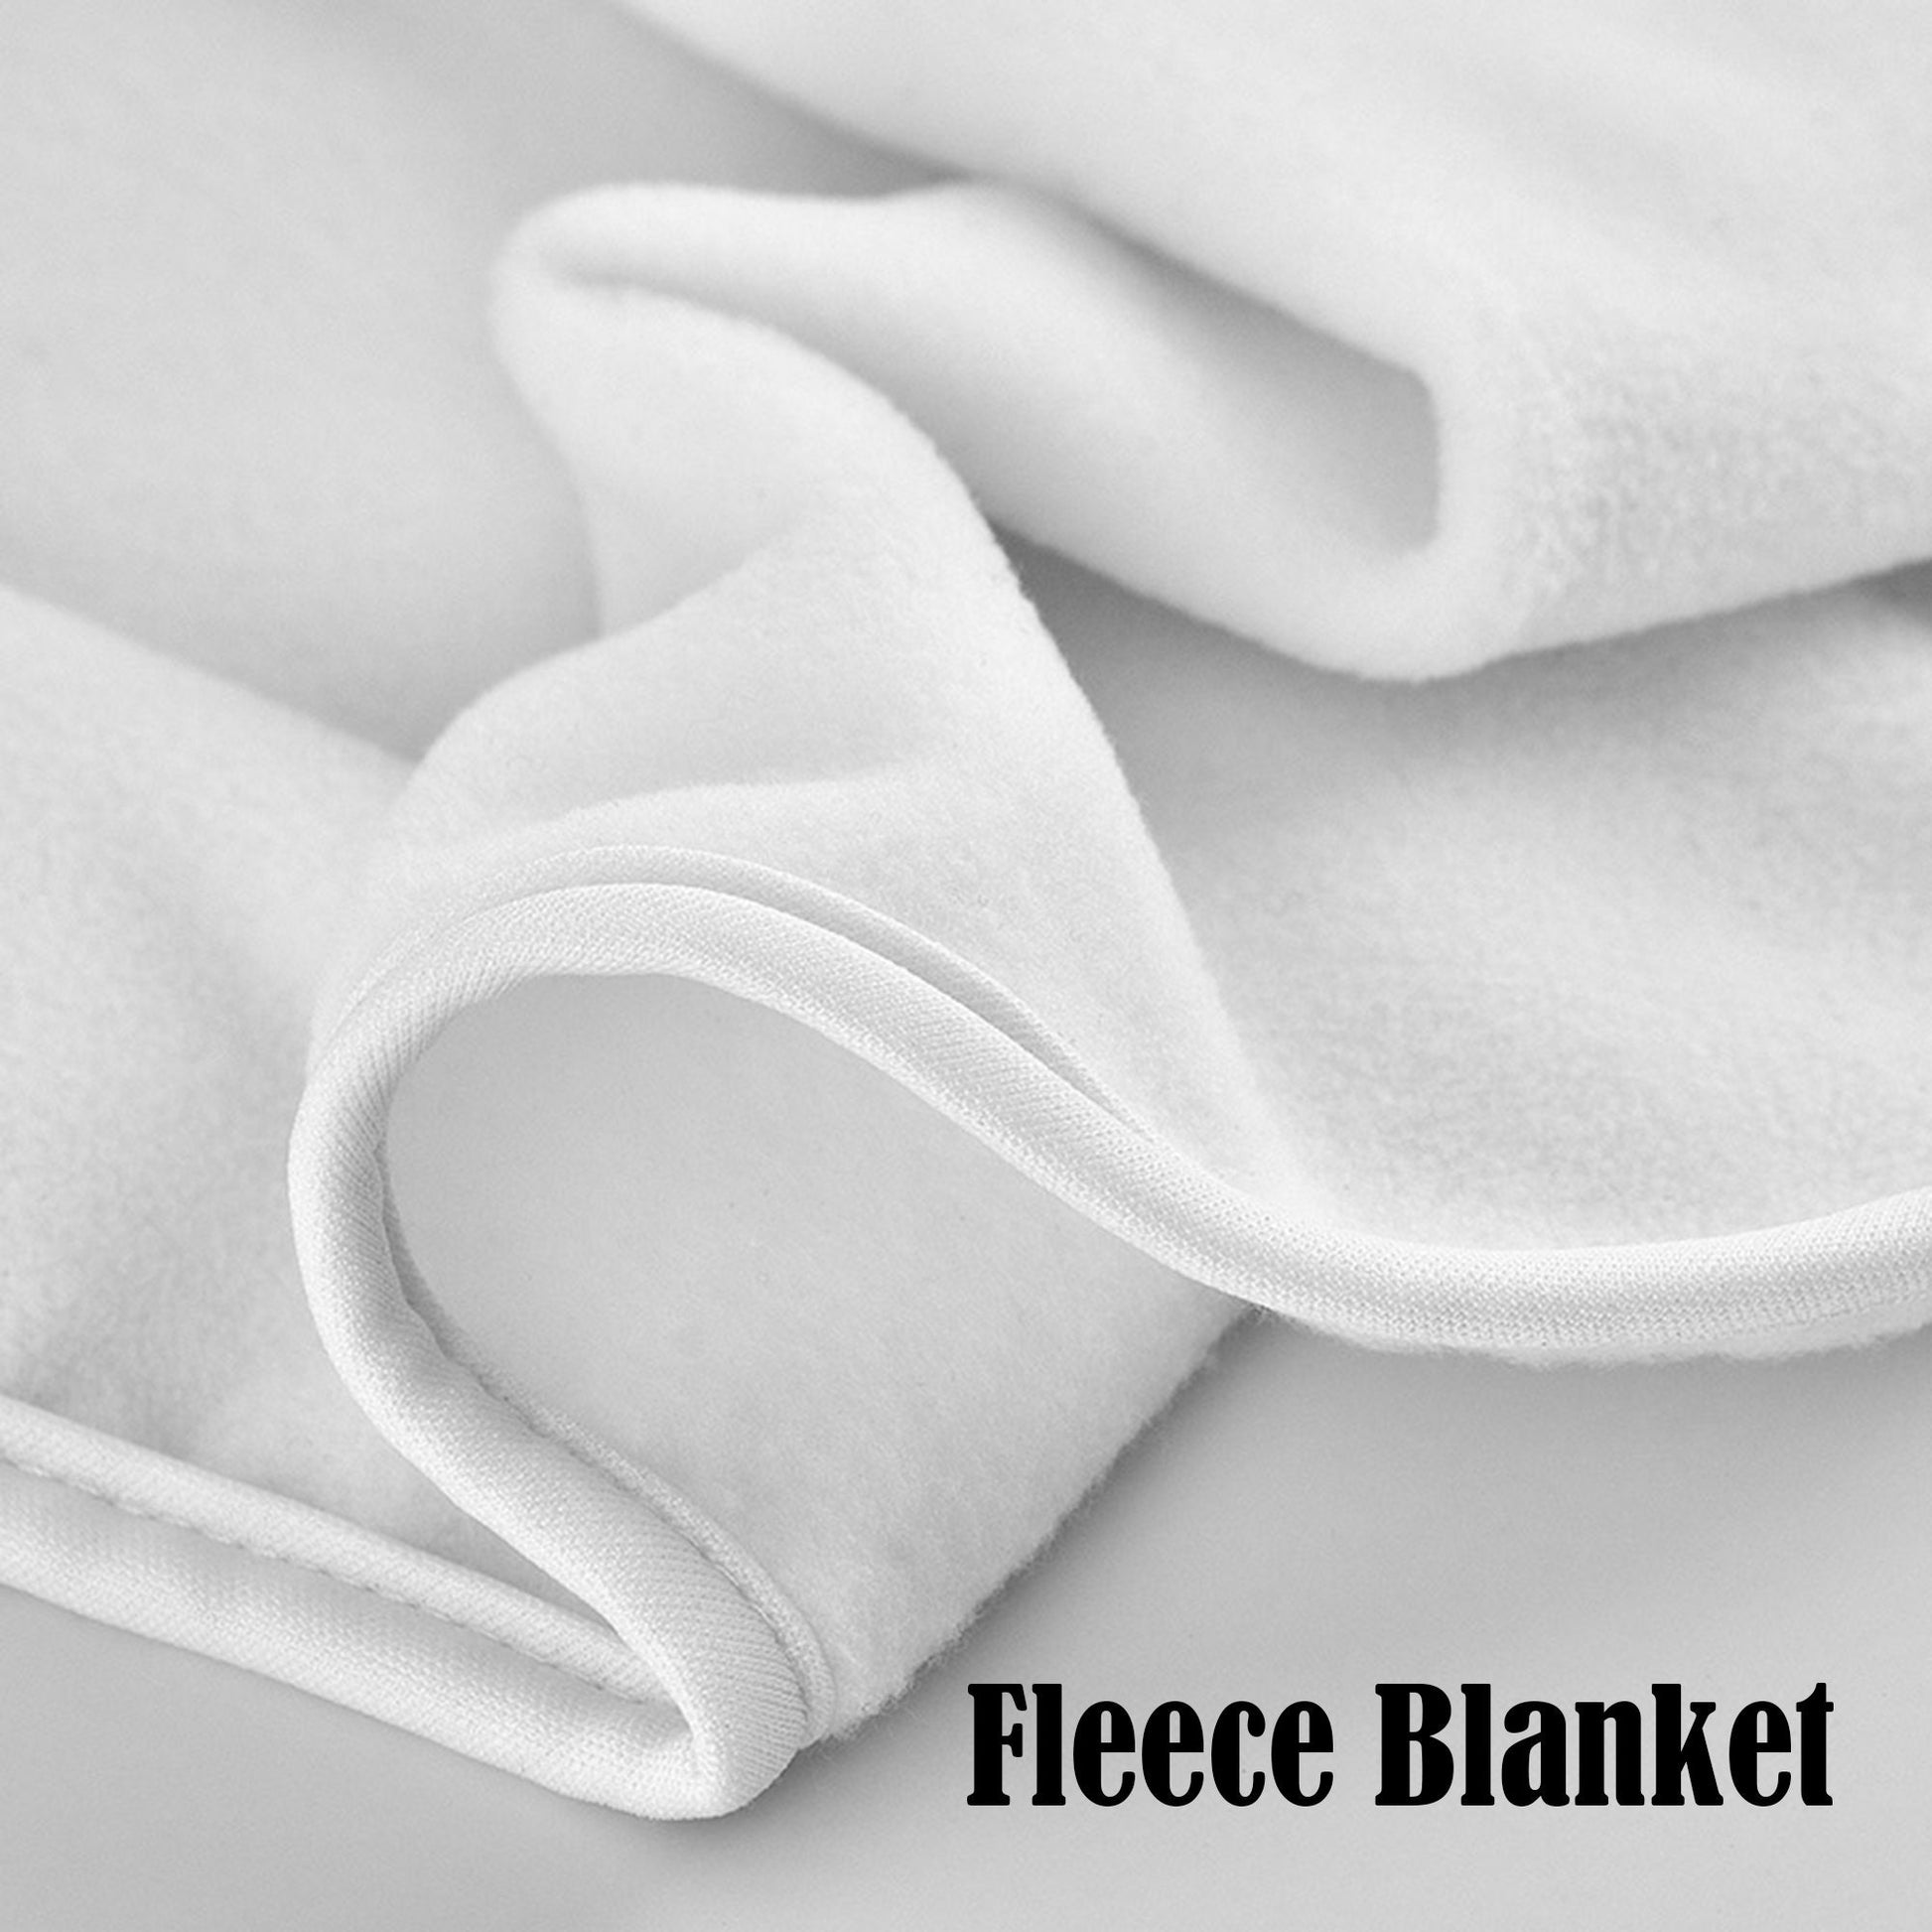 Purple Floral Baby Blanket - Violet Flower Blanket - Baby Girl Blanket - Baby Shower Gift - Floral Nursery Decor - Baby Blanket - Minky